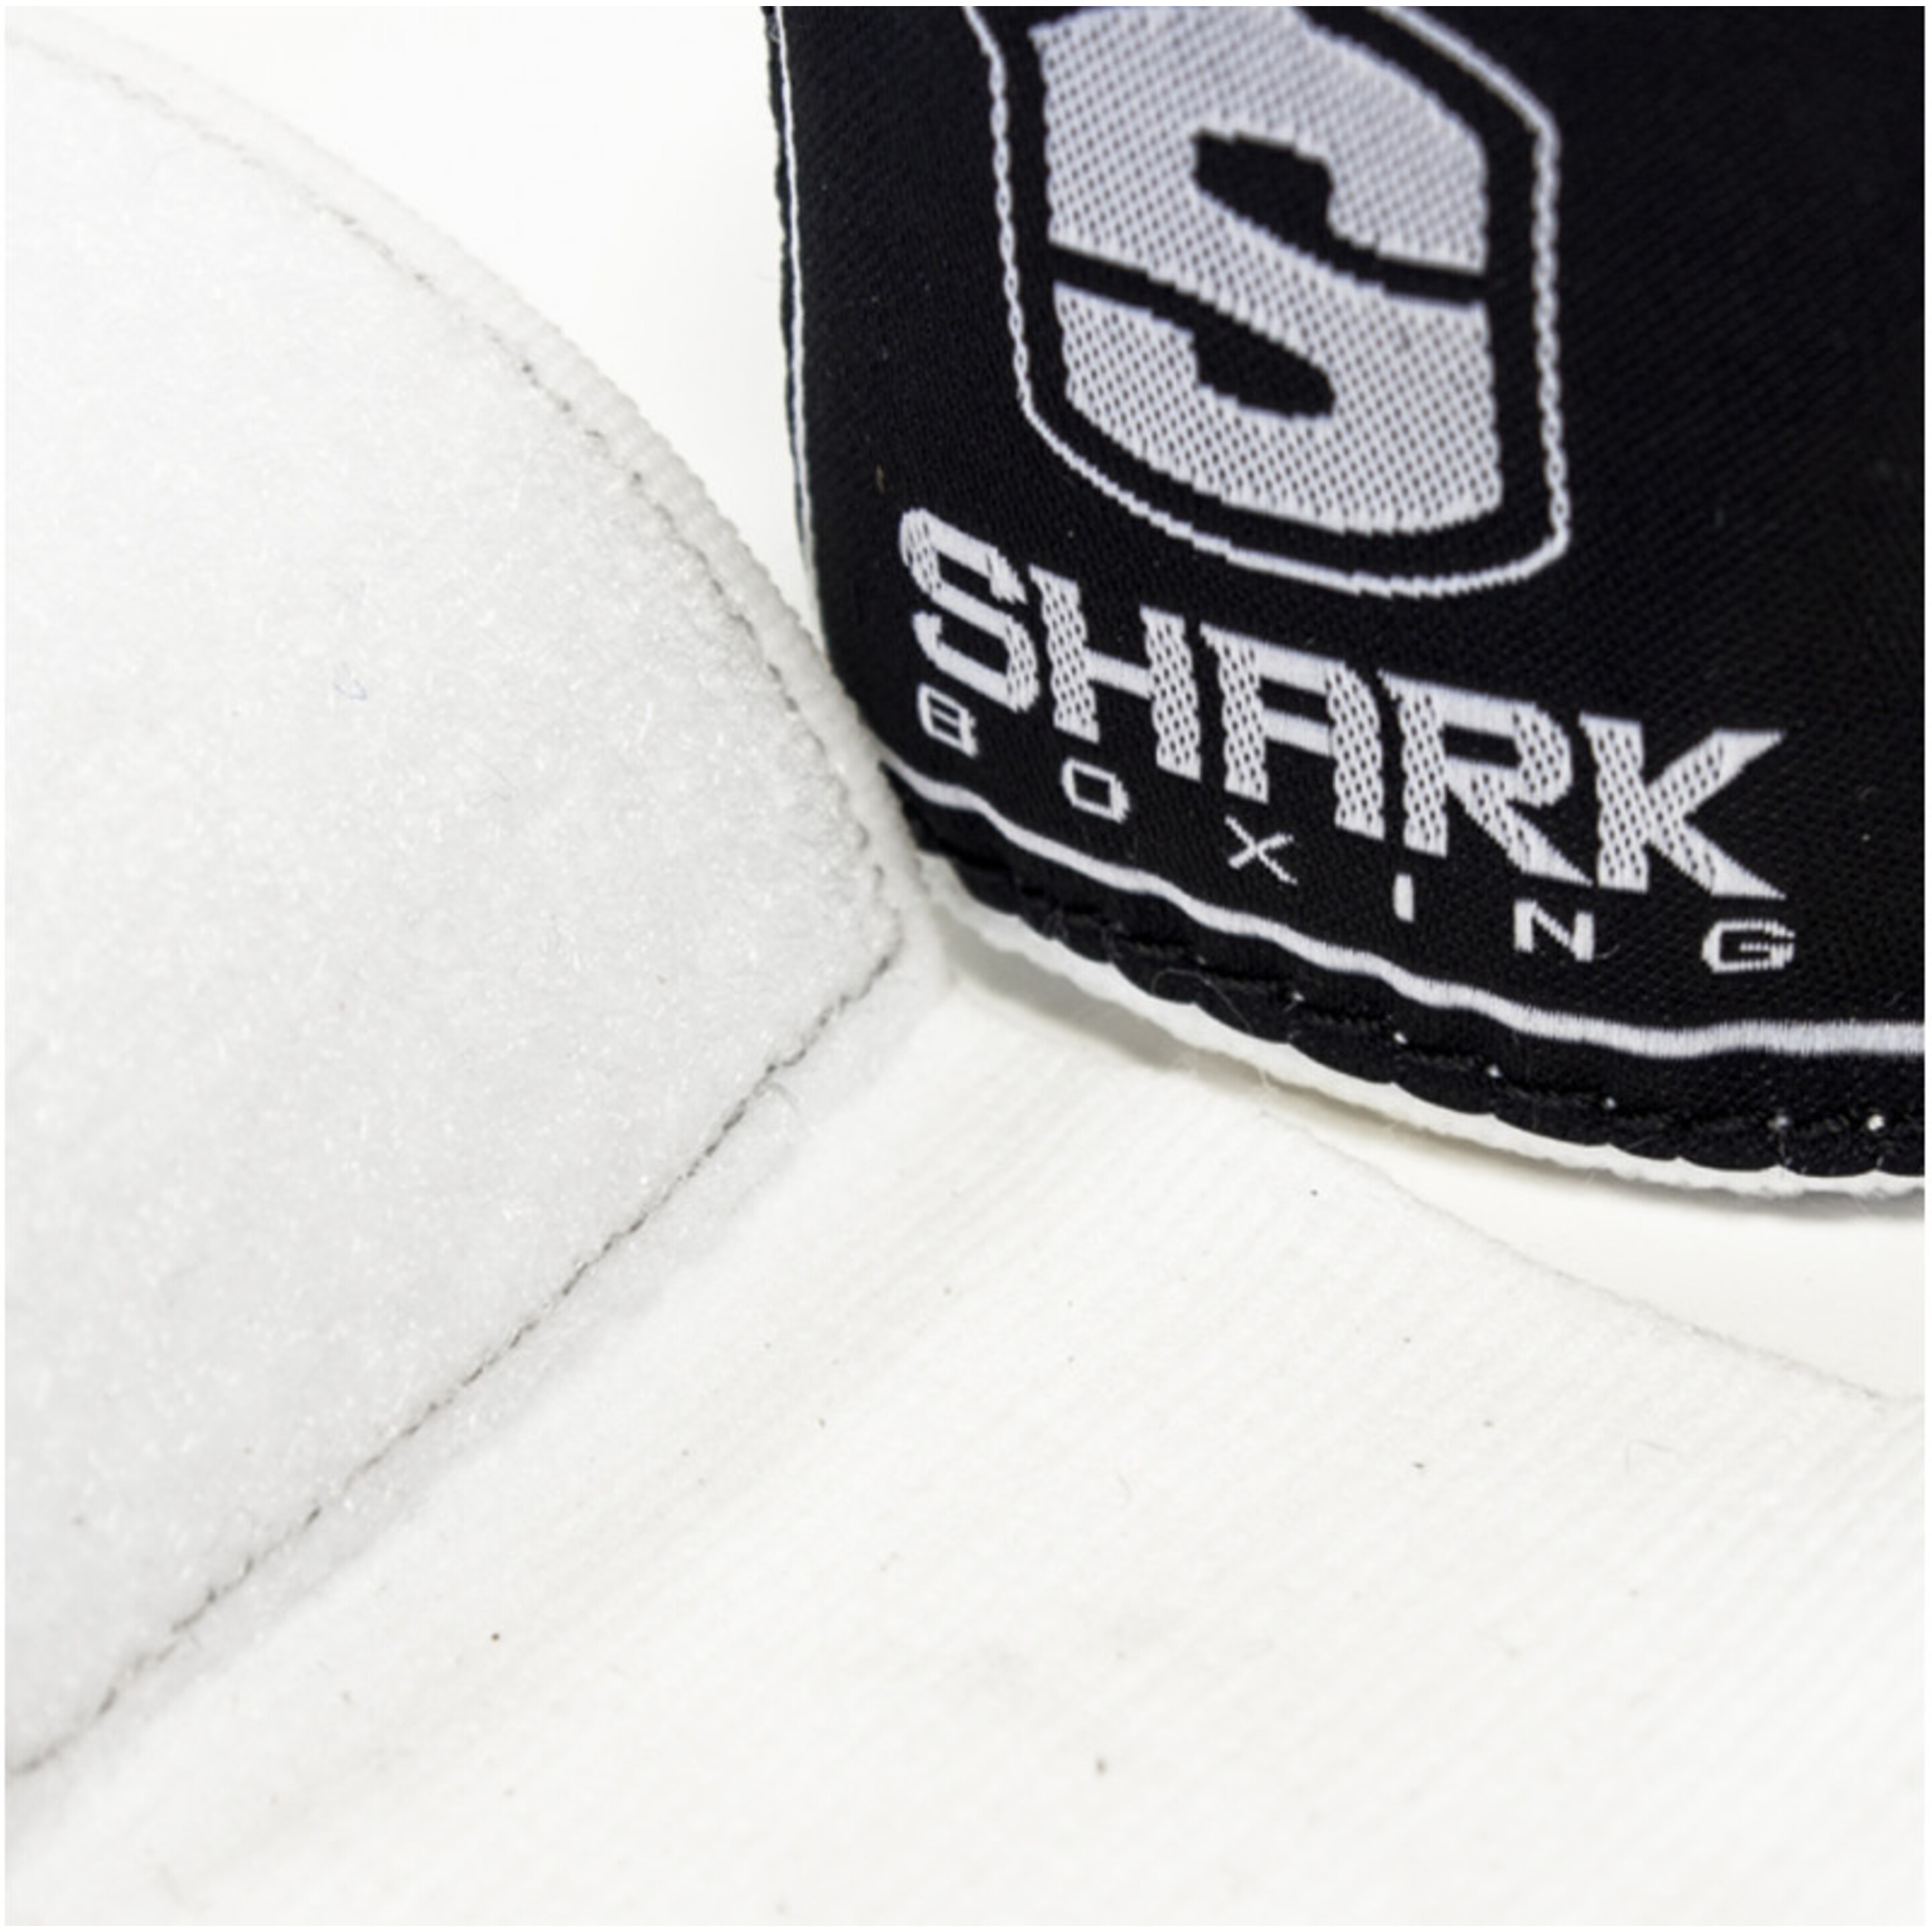 Venda Semielástica Shark Boxing - Blanco  MKP